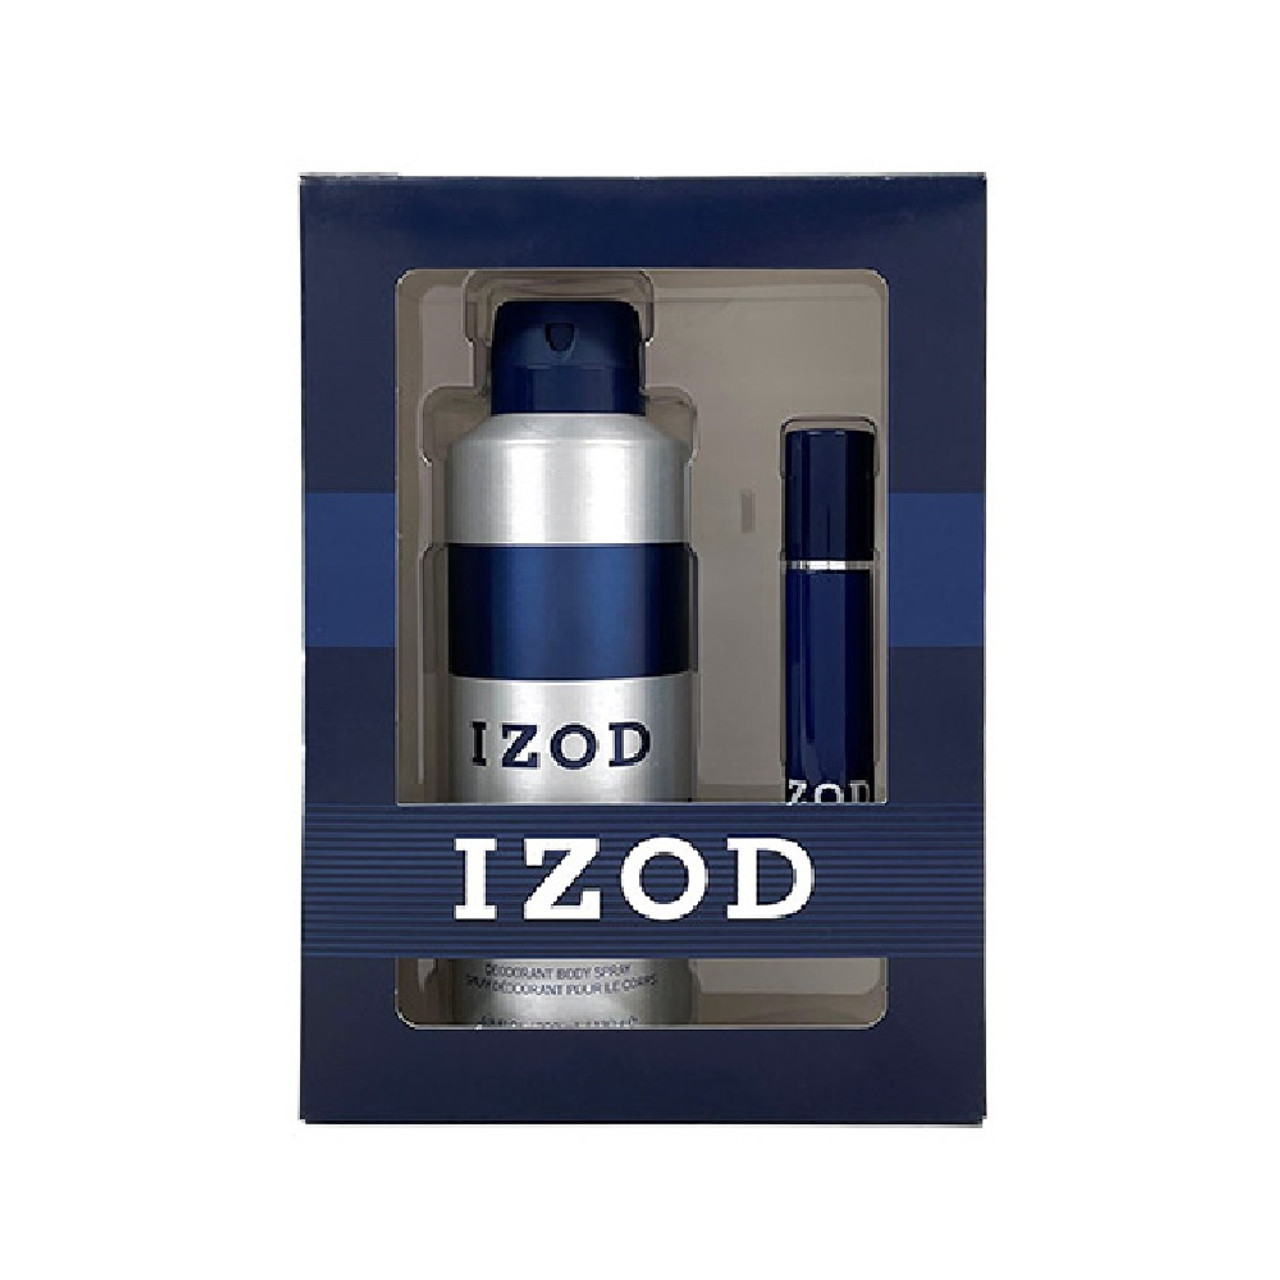 IZOD RED 2 PCS GIFT SET FOR MEN: 0.5 EAU DE TOILETTE TRAVEL SPRAY + 6.8  BODY SPRAY - Nandansons International Inc.